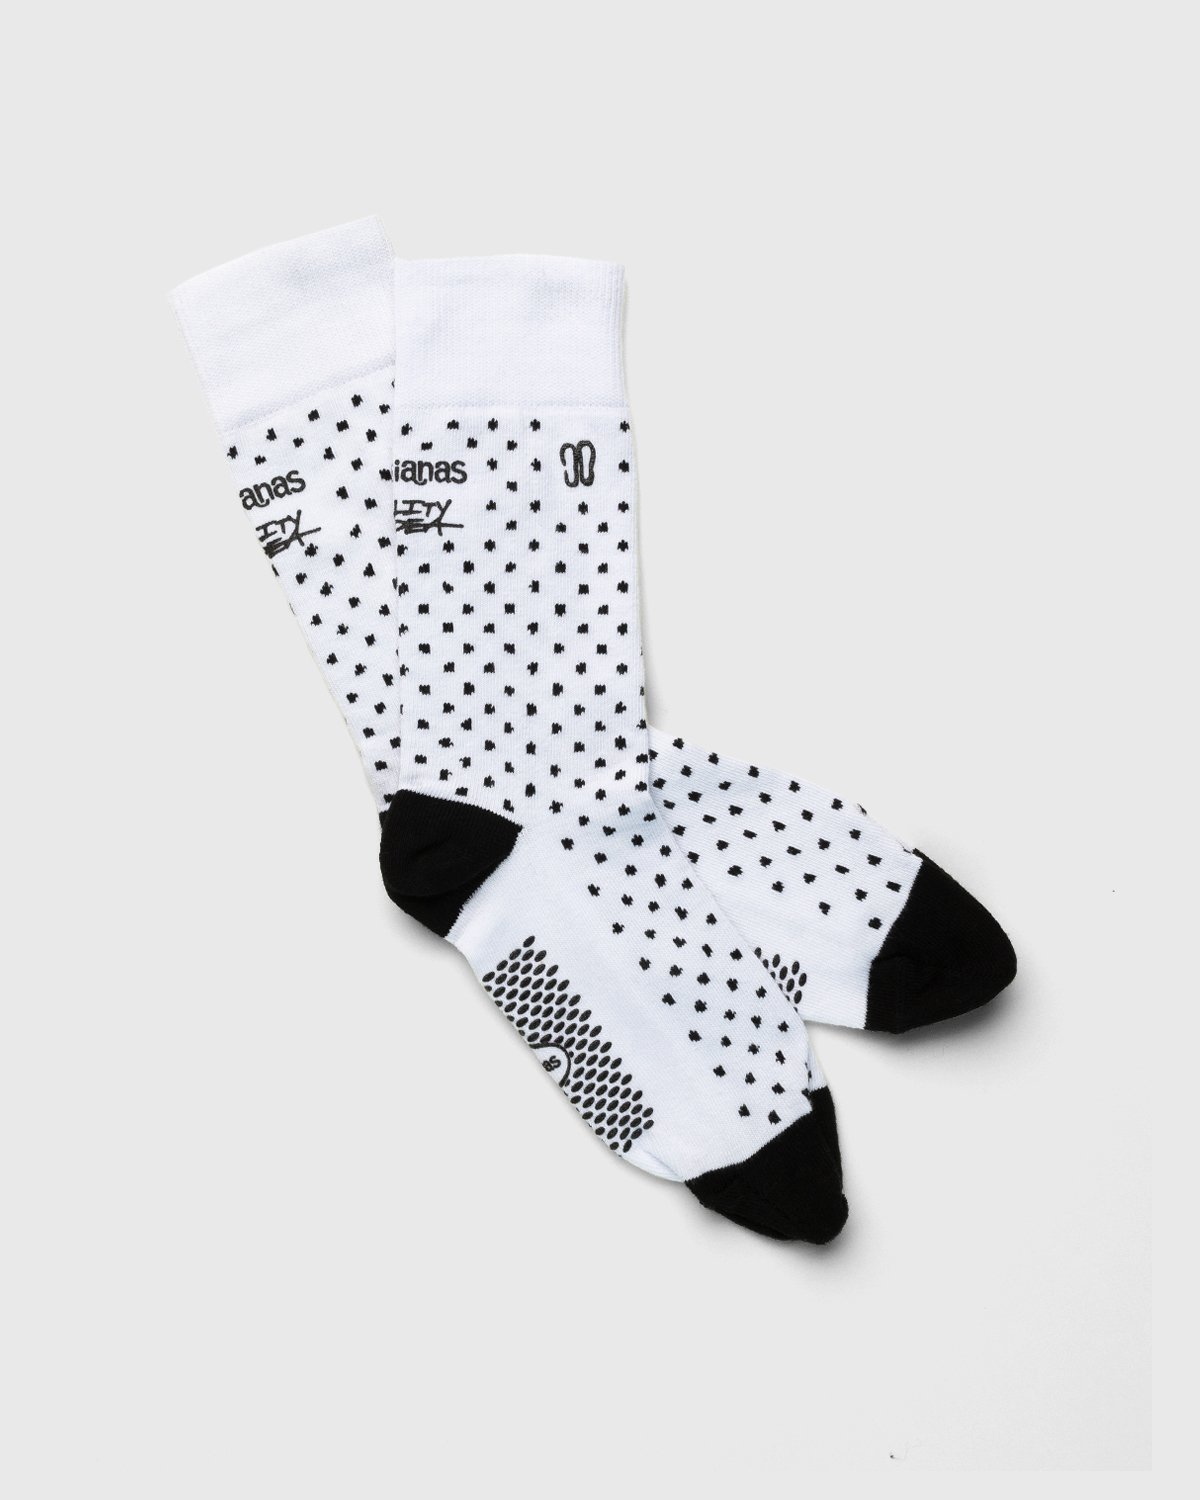 havaianas - Reality to Idea by Joshuas Vides Split-Toe Socks White - Accessories - White - Image 1